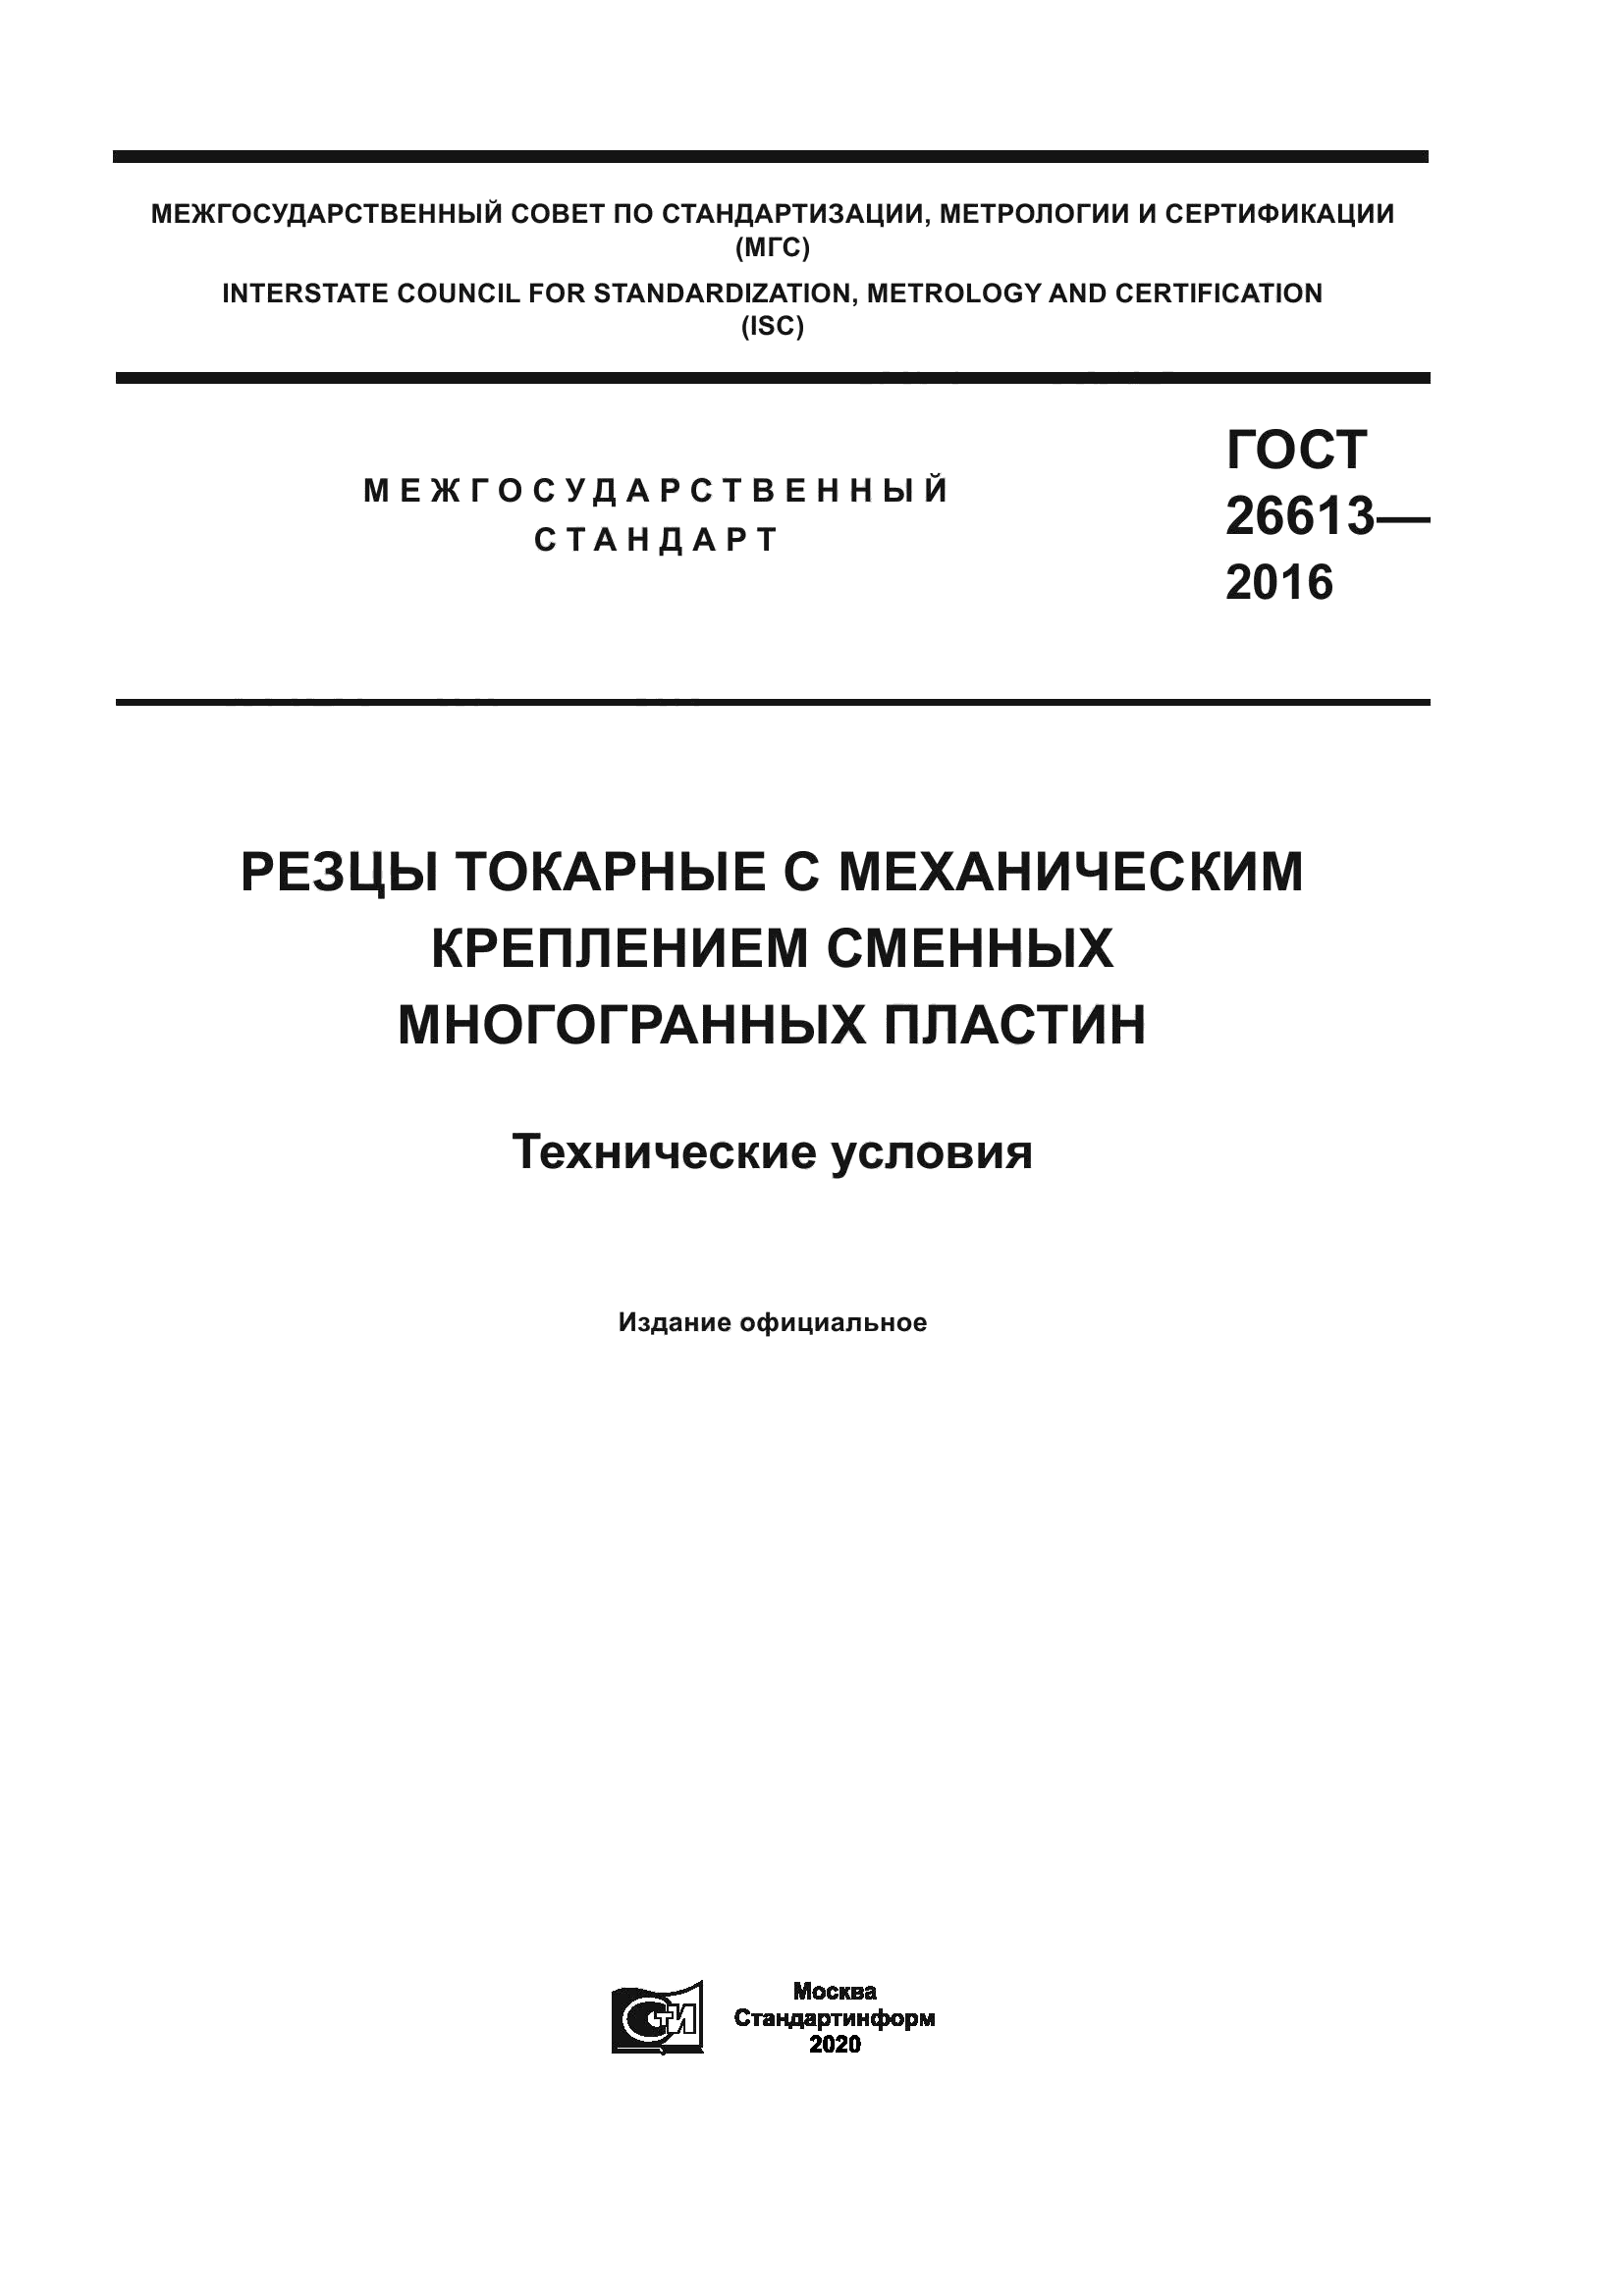 ГОСТ 26613-2016